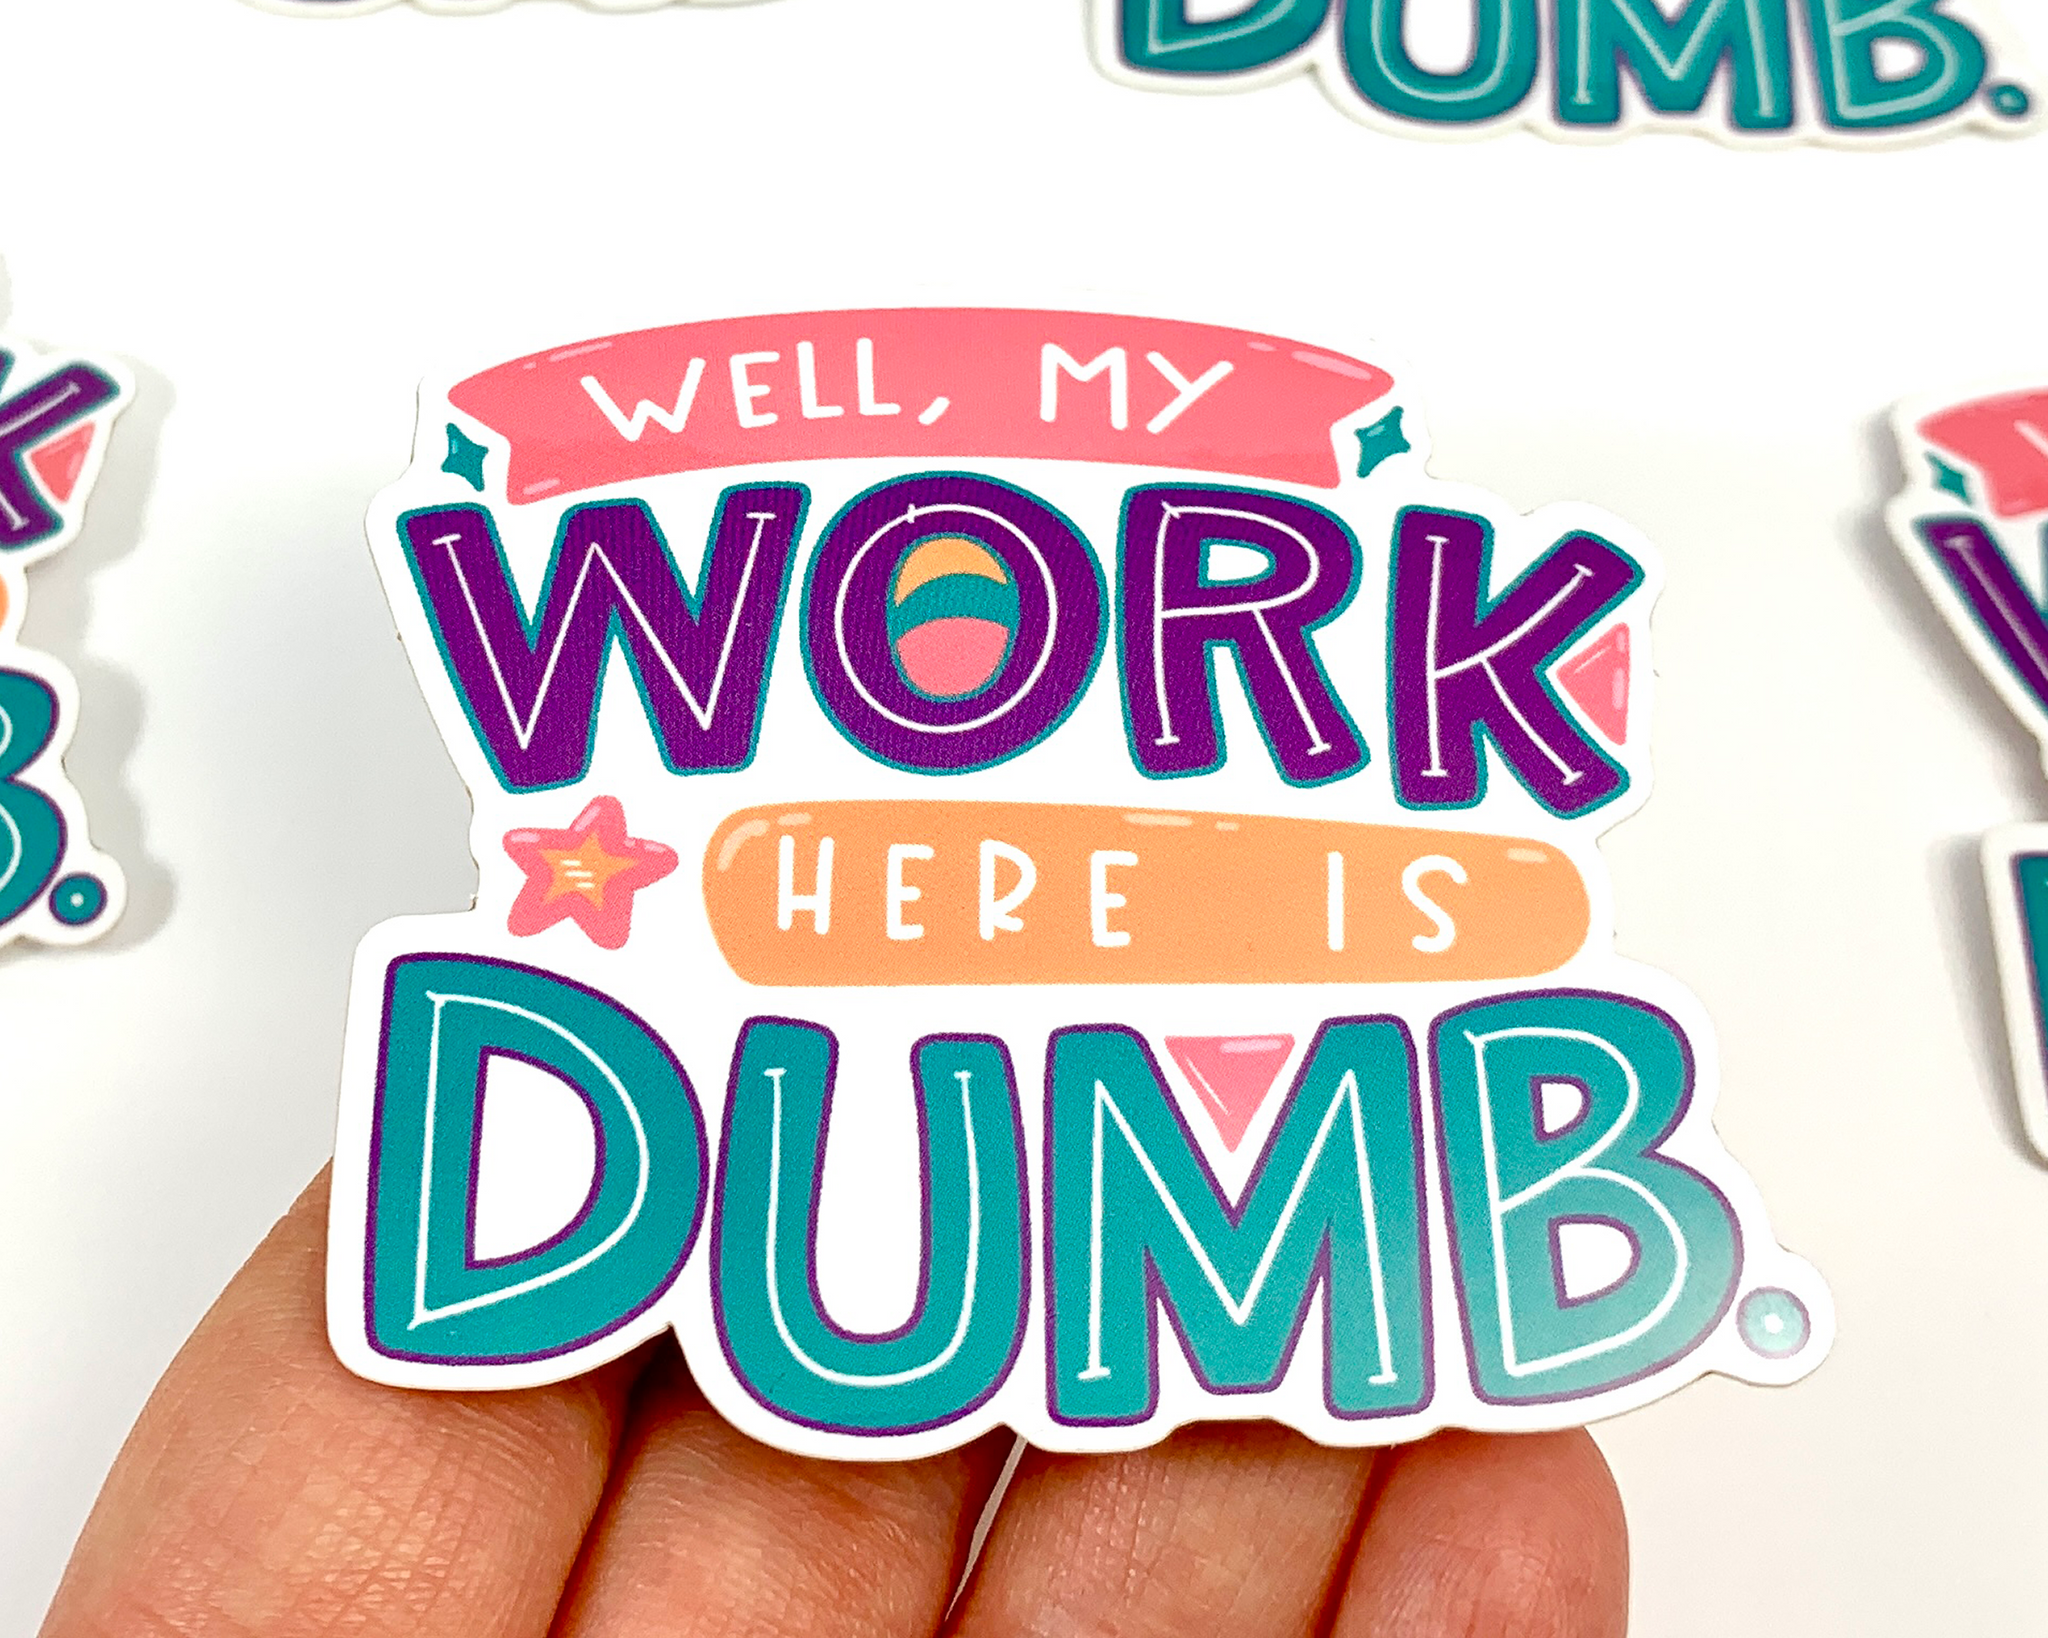 Work is Dumb Sticker